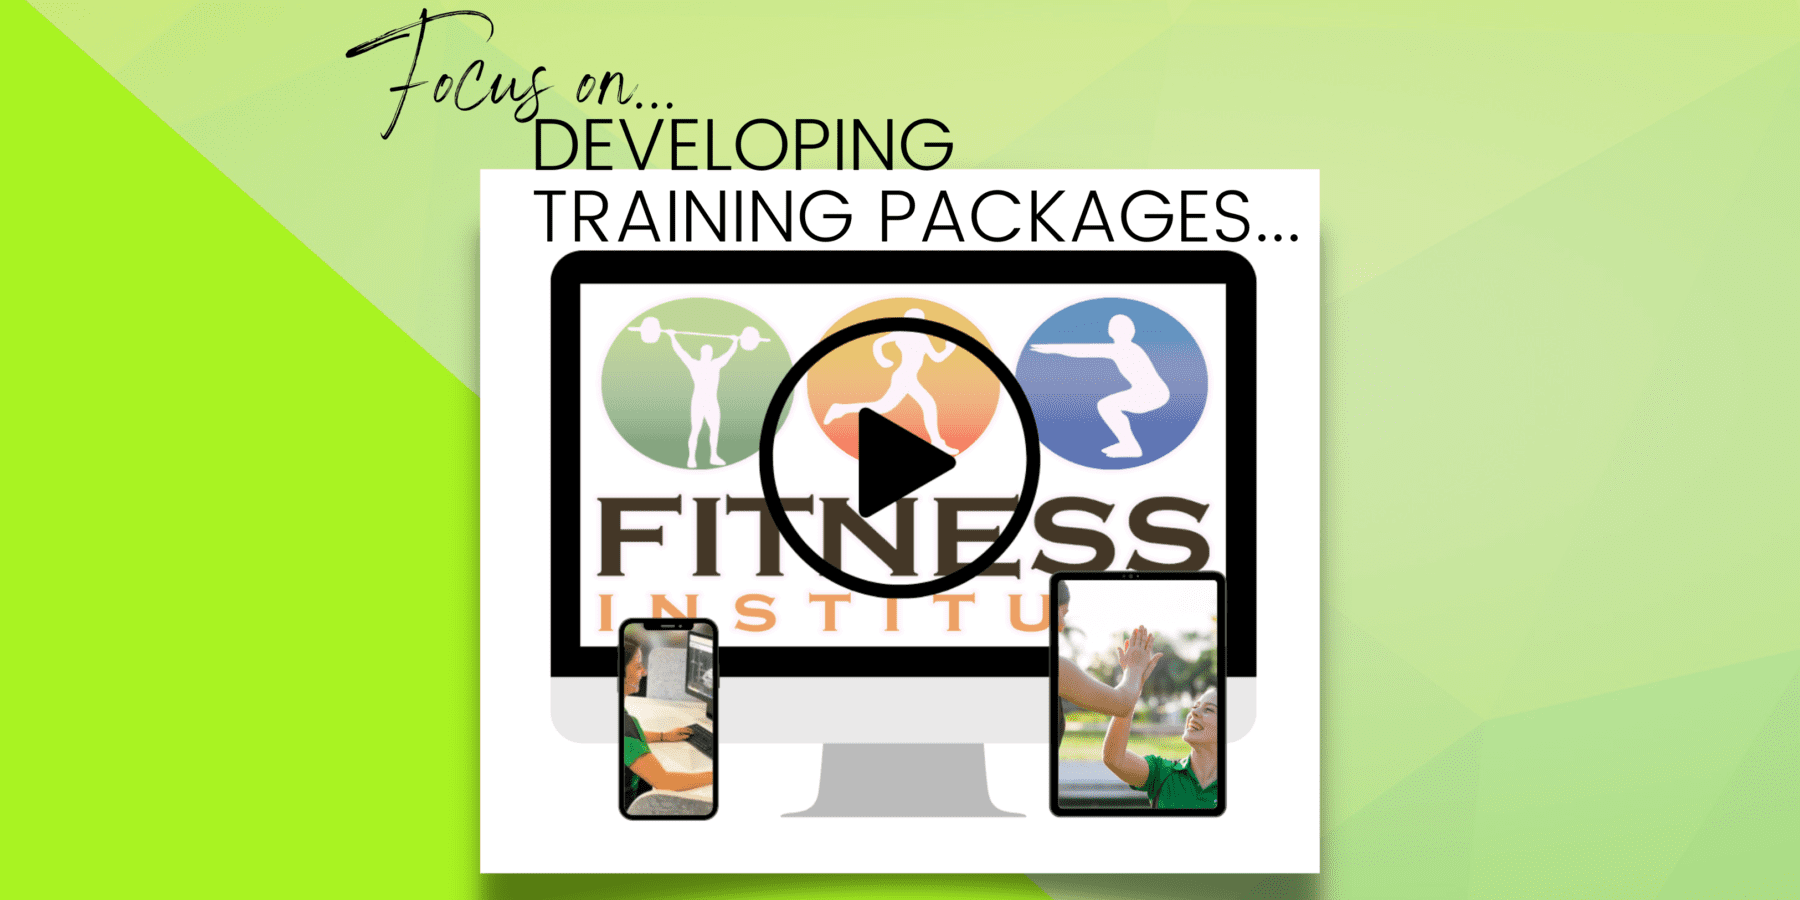 Creating Training Courses